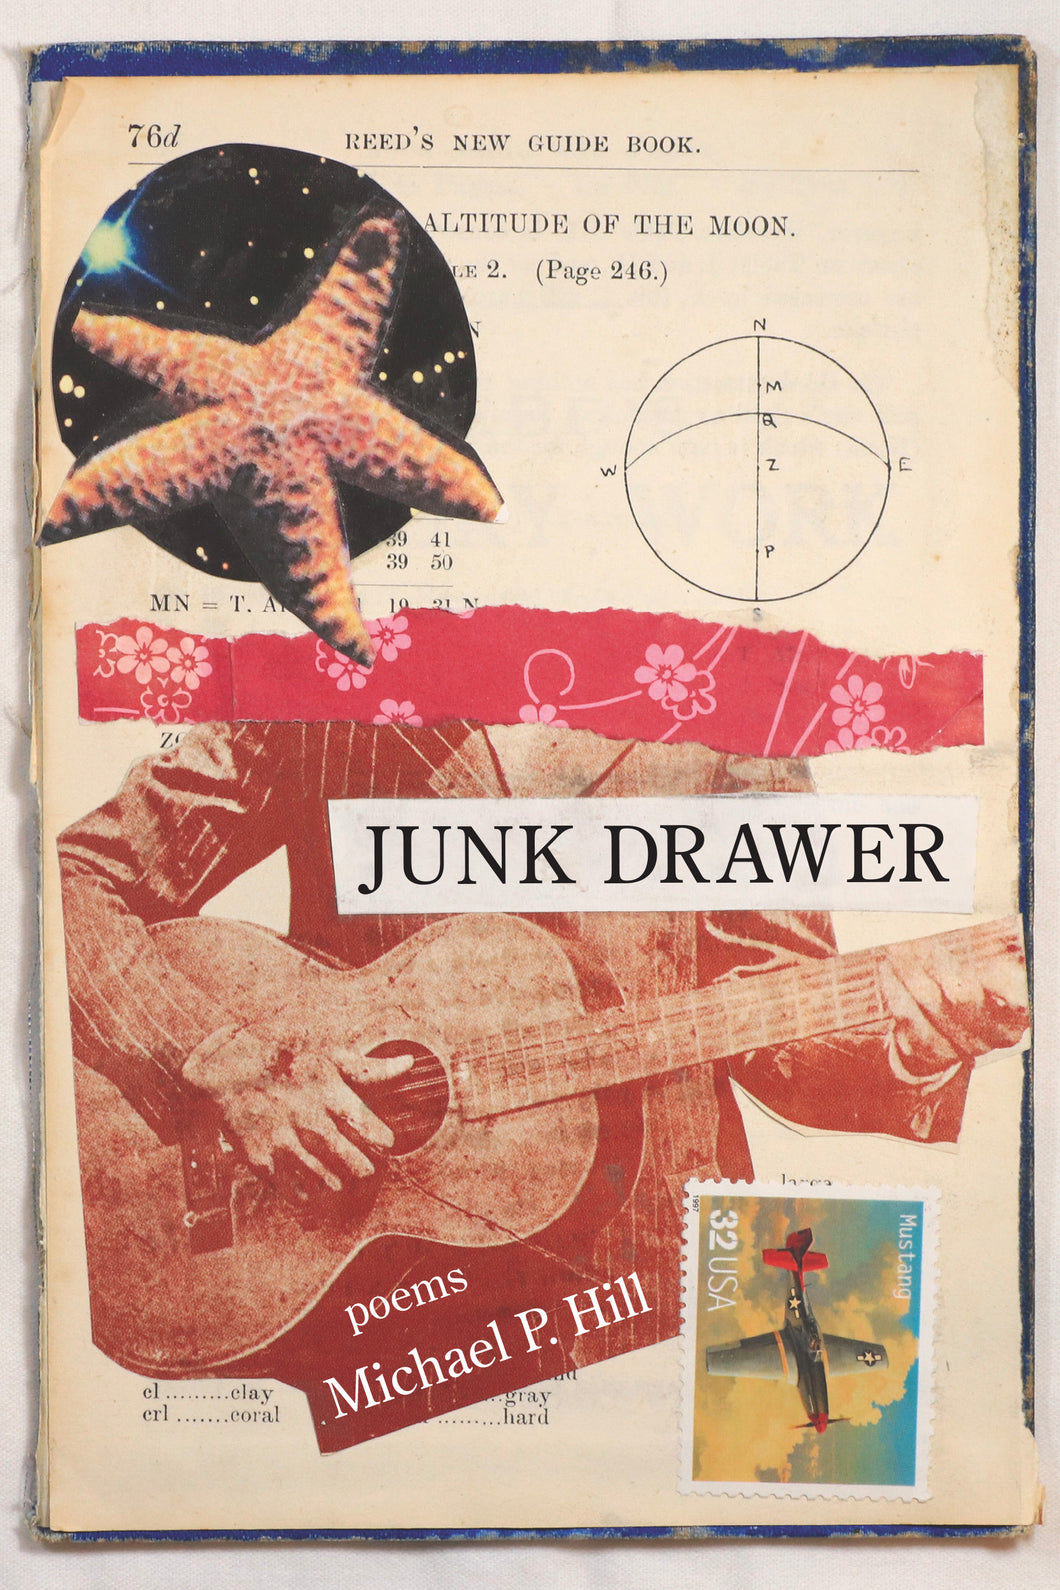 Junk Drawer